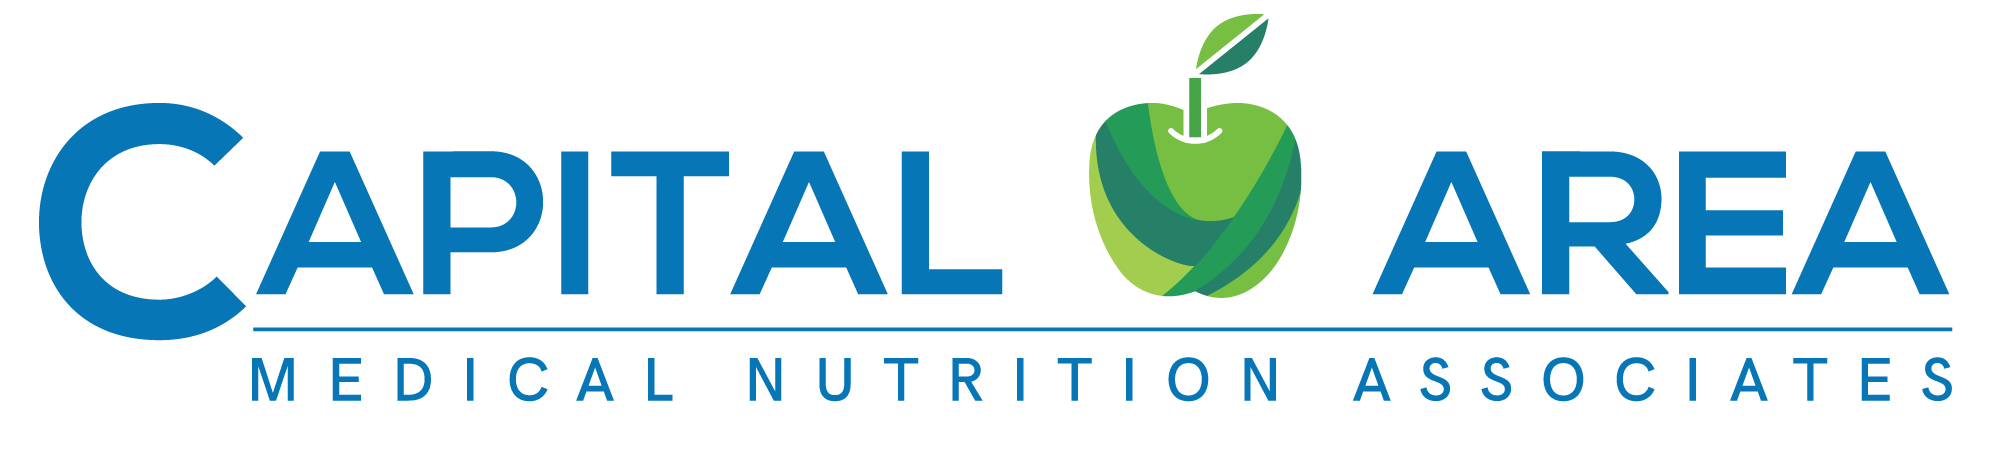 Capital-Area-Medical-Nutrition_FINAL-2